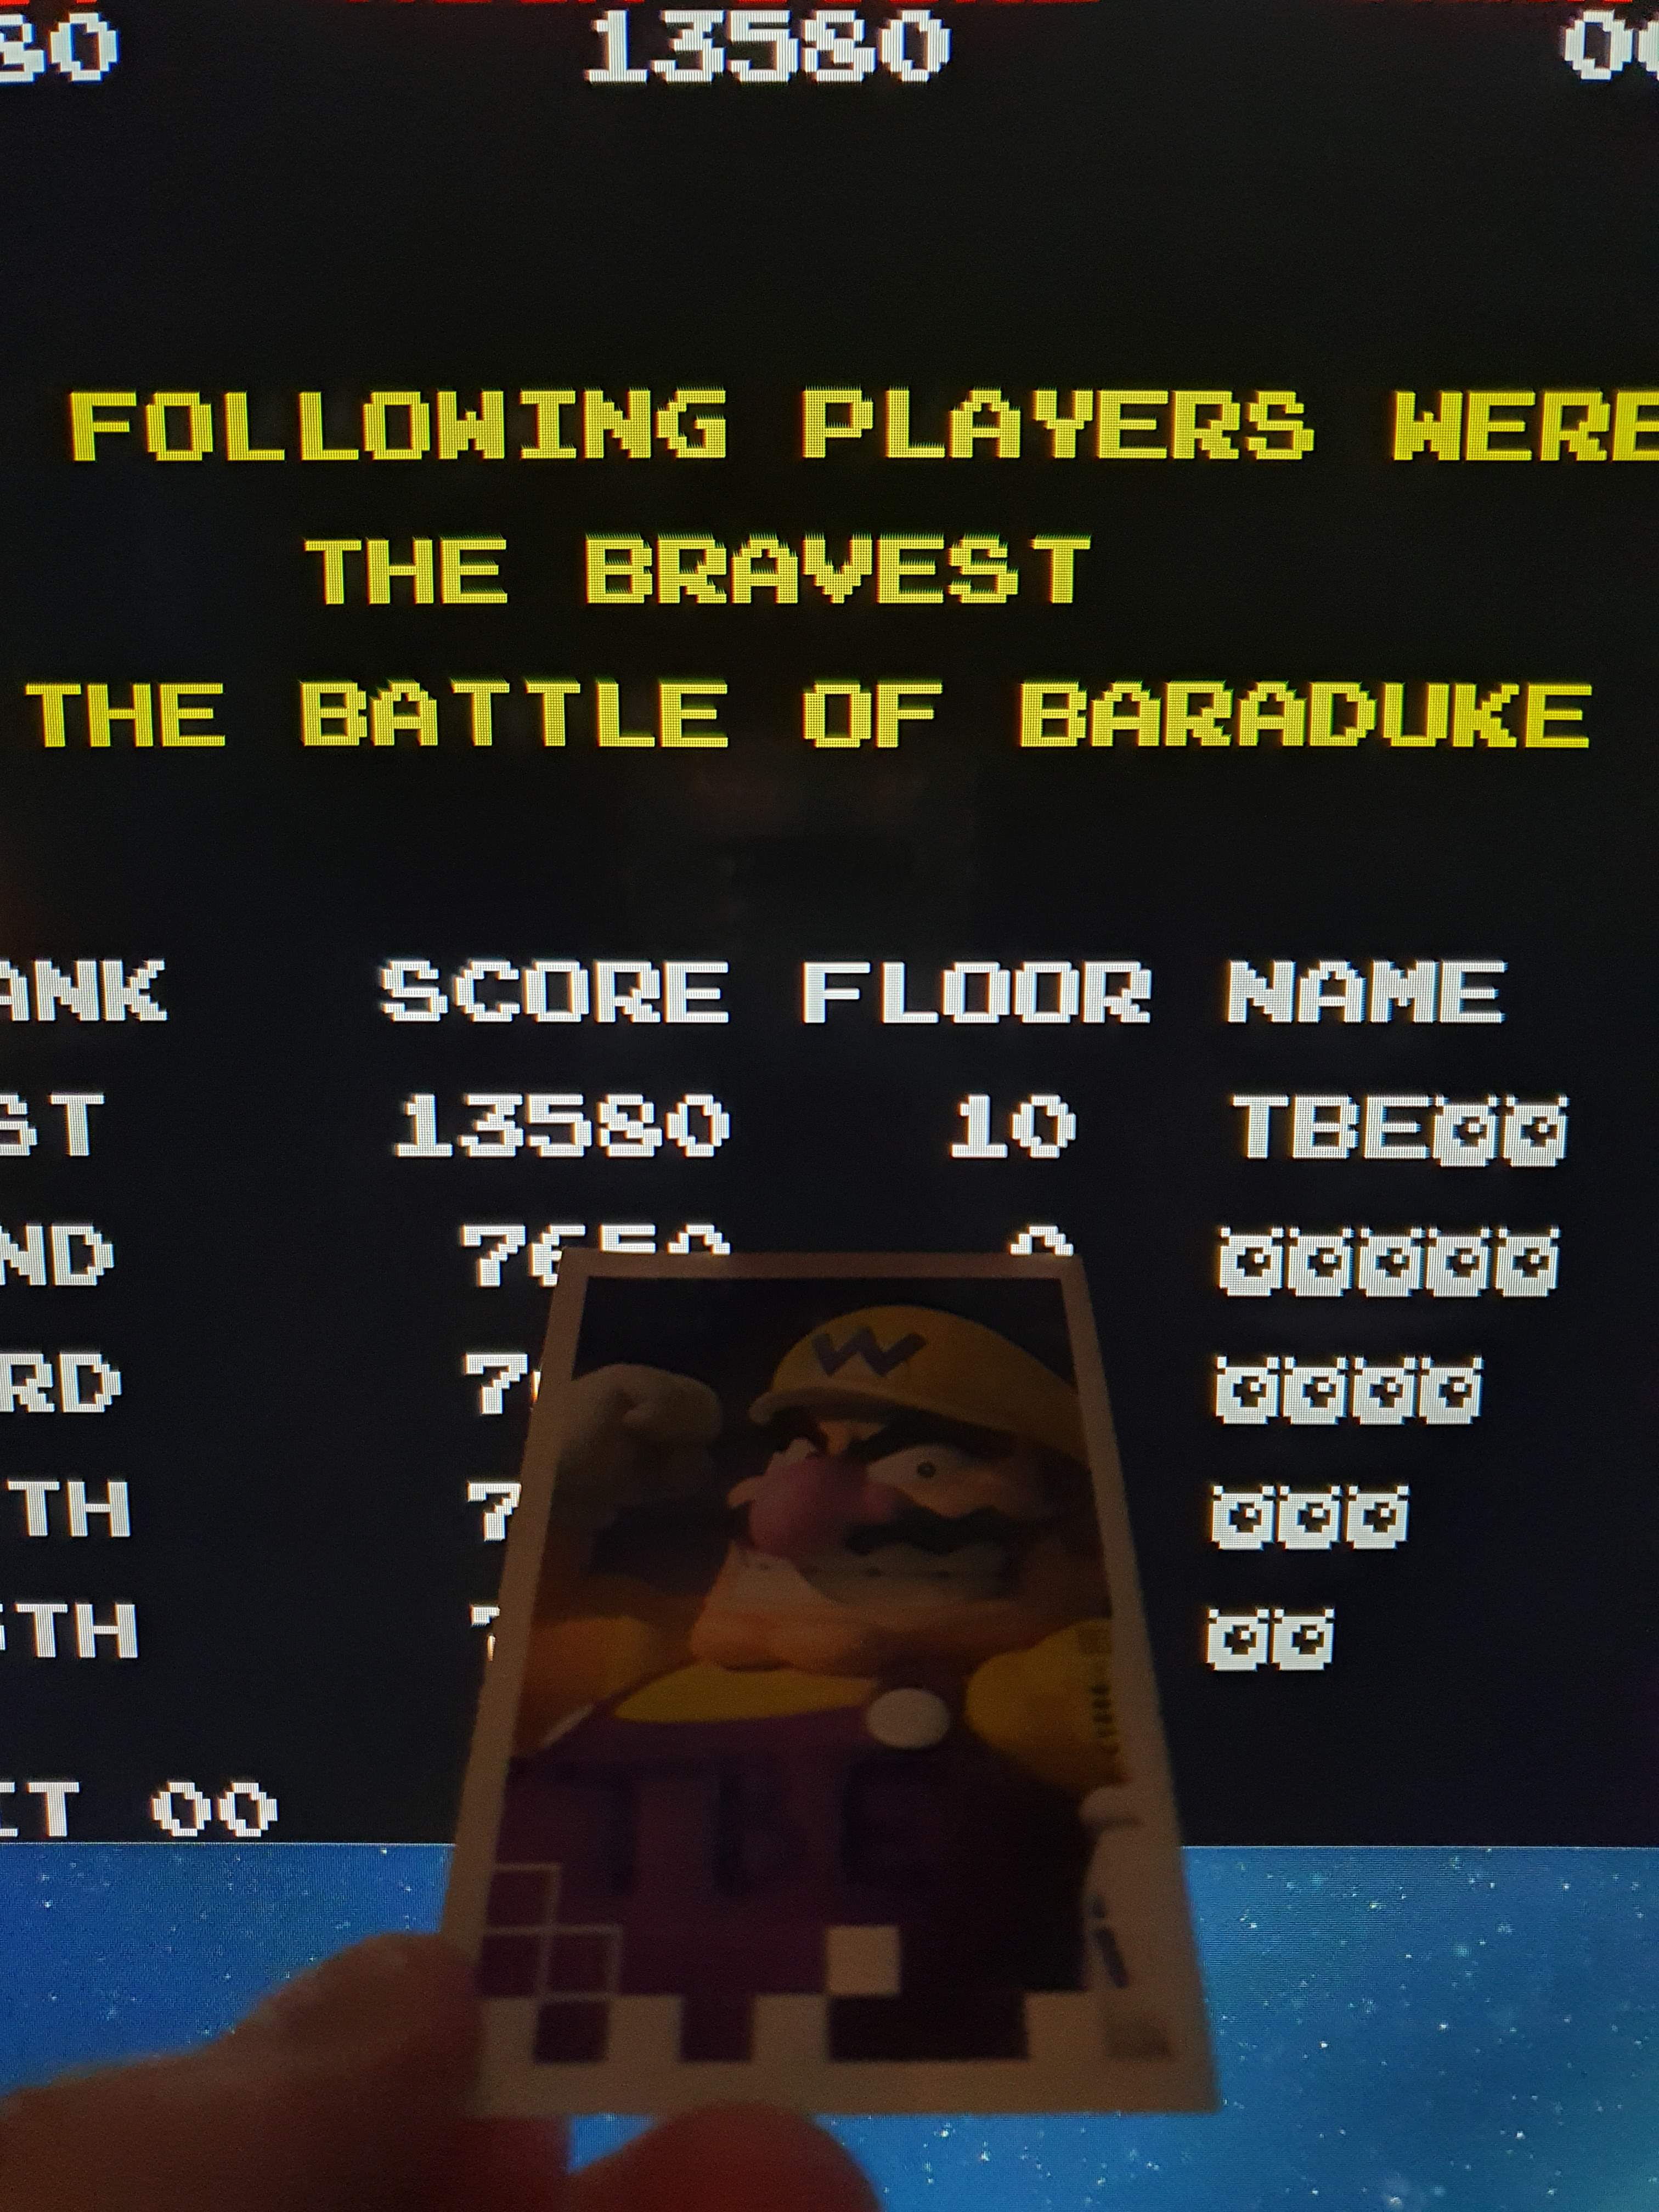 Sixx: Baraduke [baraduke] (Arcade Emulated / M.A.M.E.) 13,580 points on 2020-05-07 00:36:36